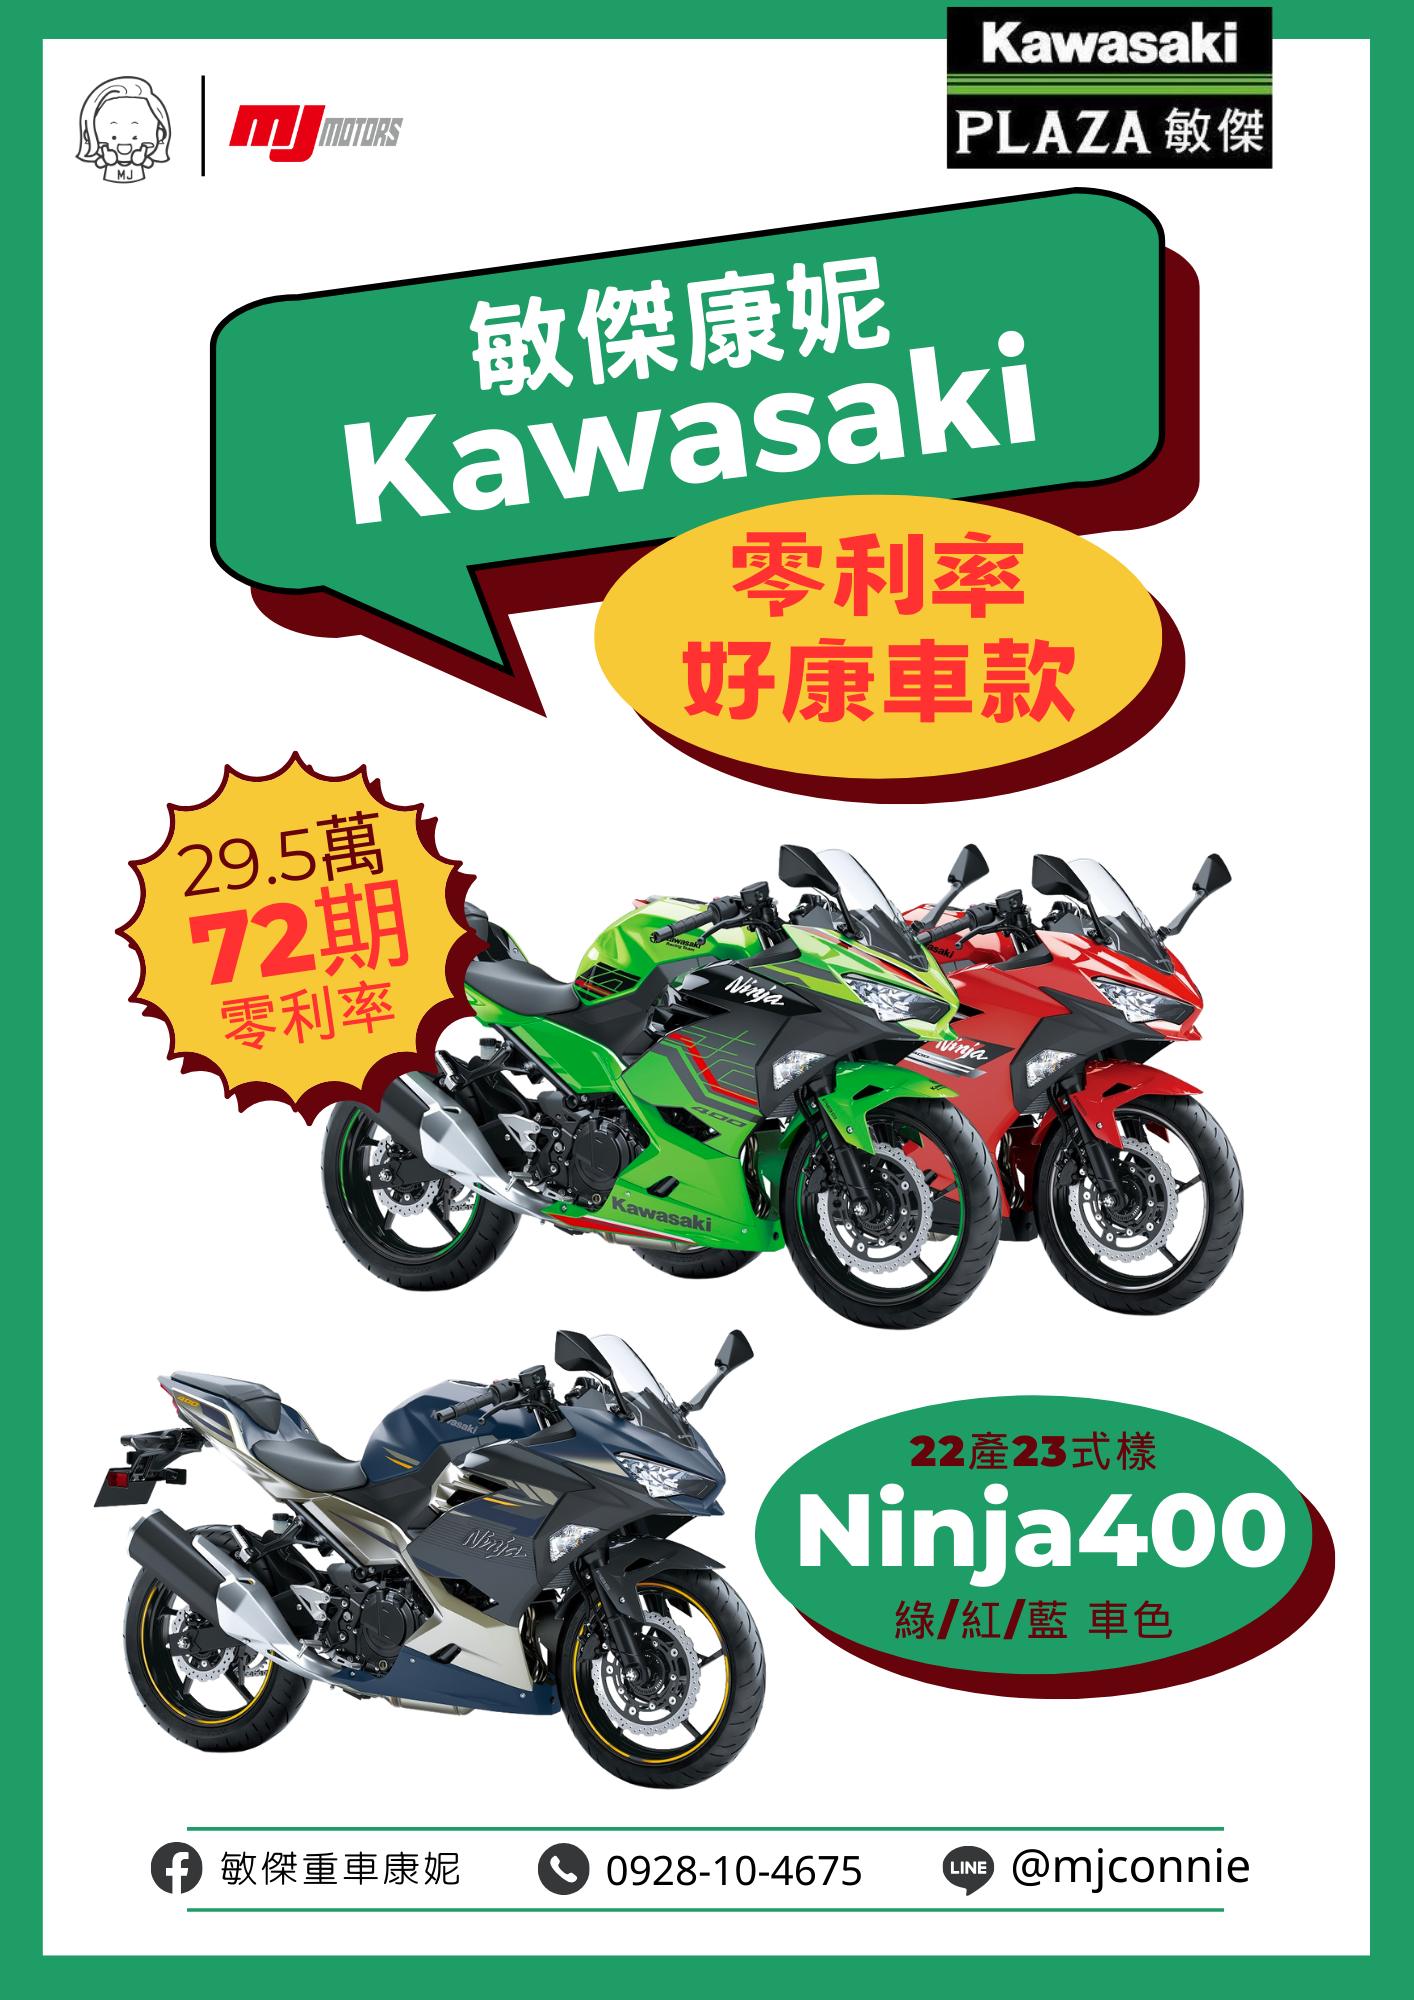 KAWASAKI NINJA400新車出售中 『敏傑康妮』本月圓夢王!!! Kawasaki Ninja400 超級好康的優惠~~月繳只需40xx~~ 即刻圓夢!! | 敏傑車業資深銷售專員 康妮 Connie